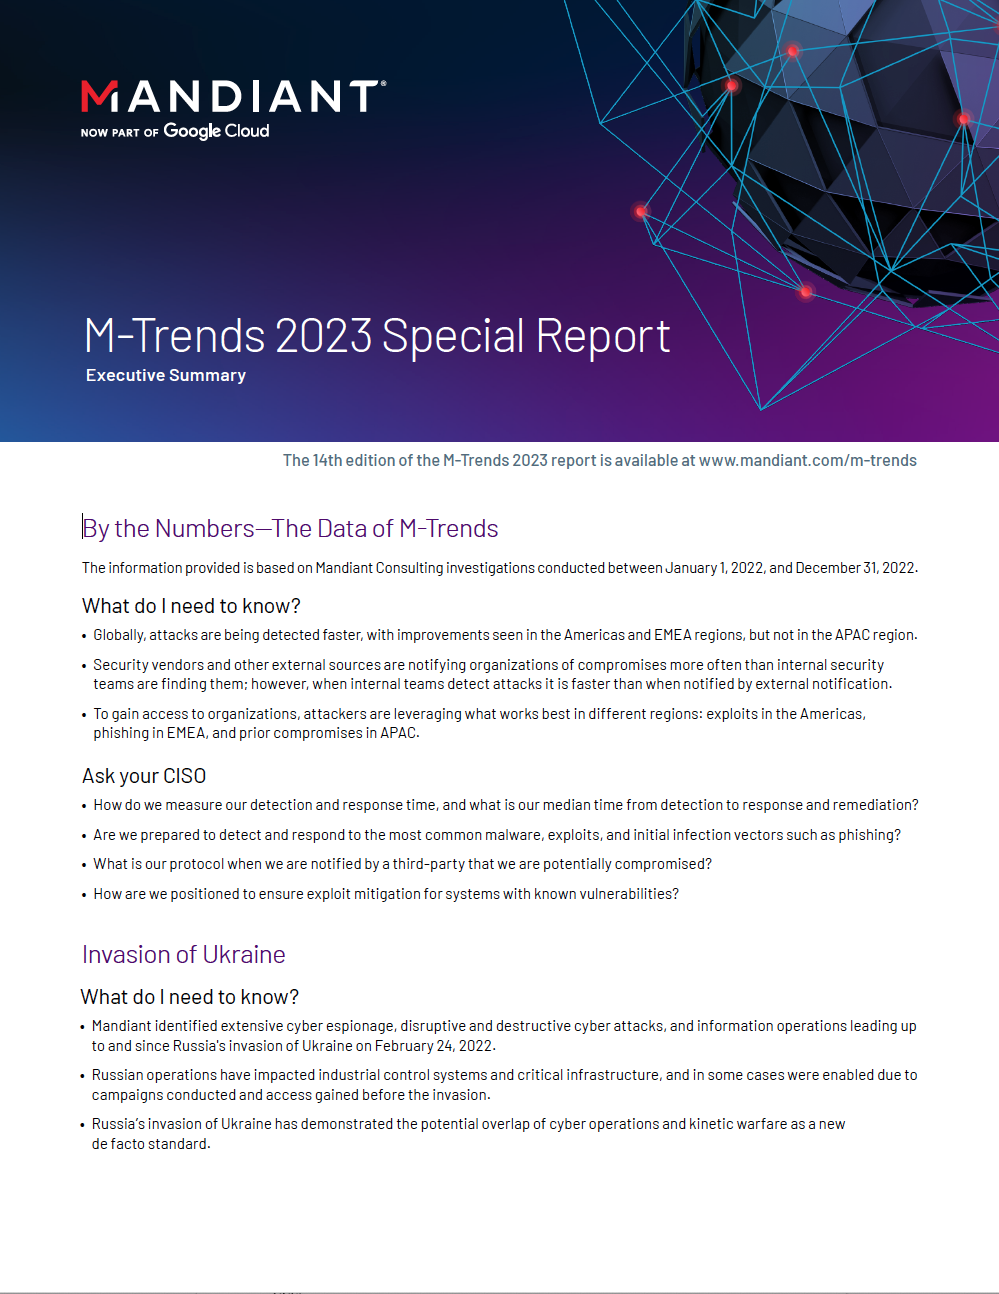 M-Trends Executive Summary